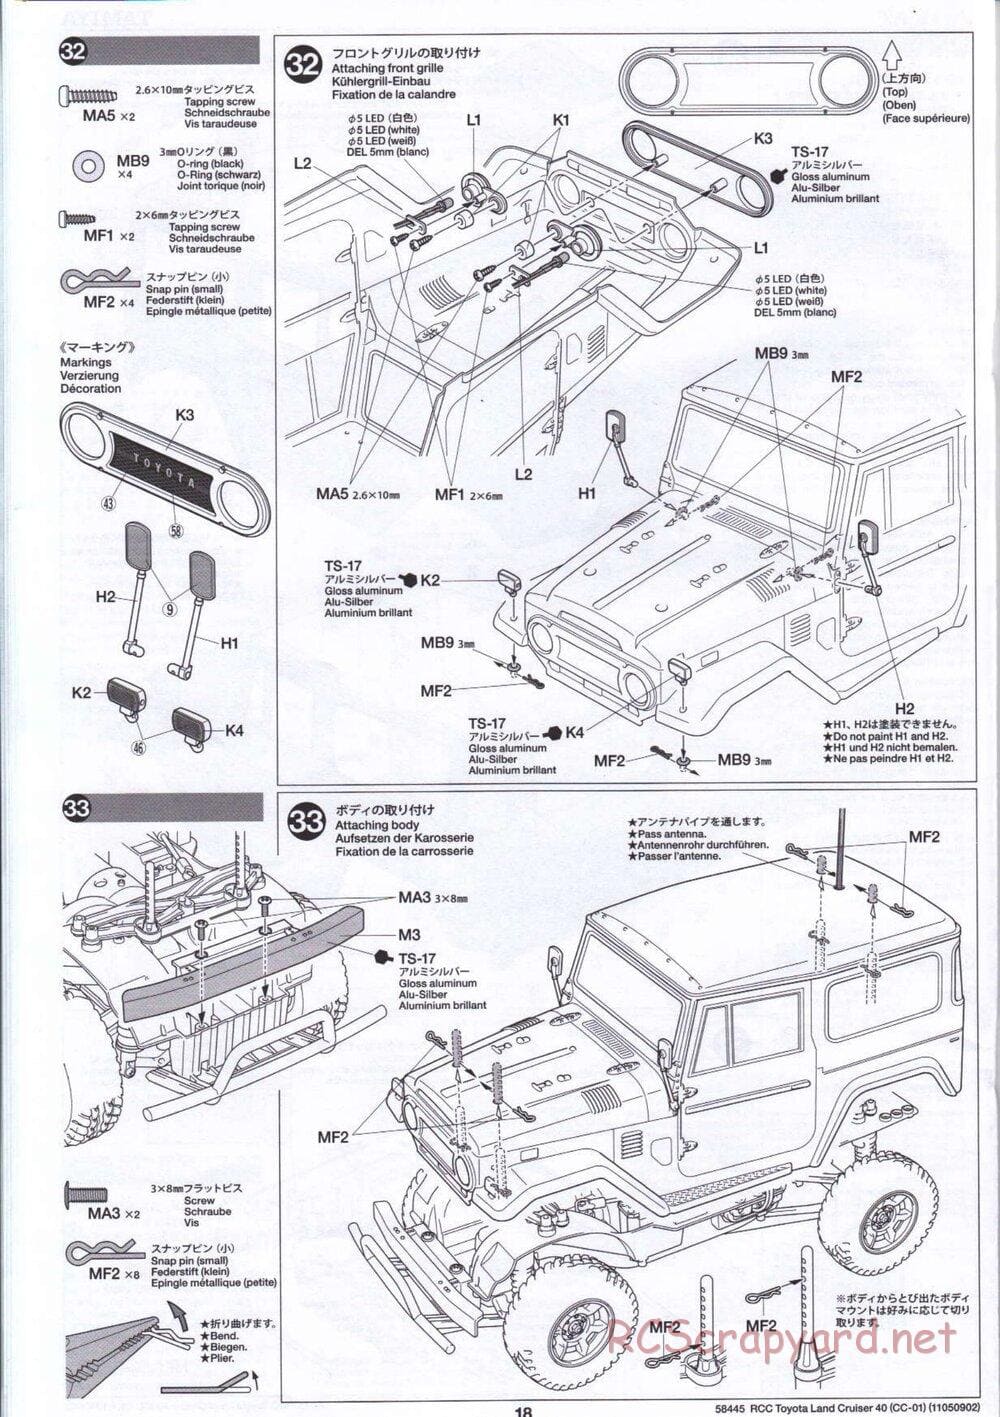 Tamiya - Toyota Land Cruiser 40 - CC-01 Chassis - Manual - Page 18